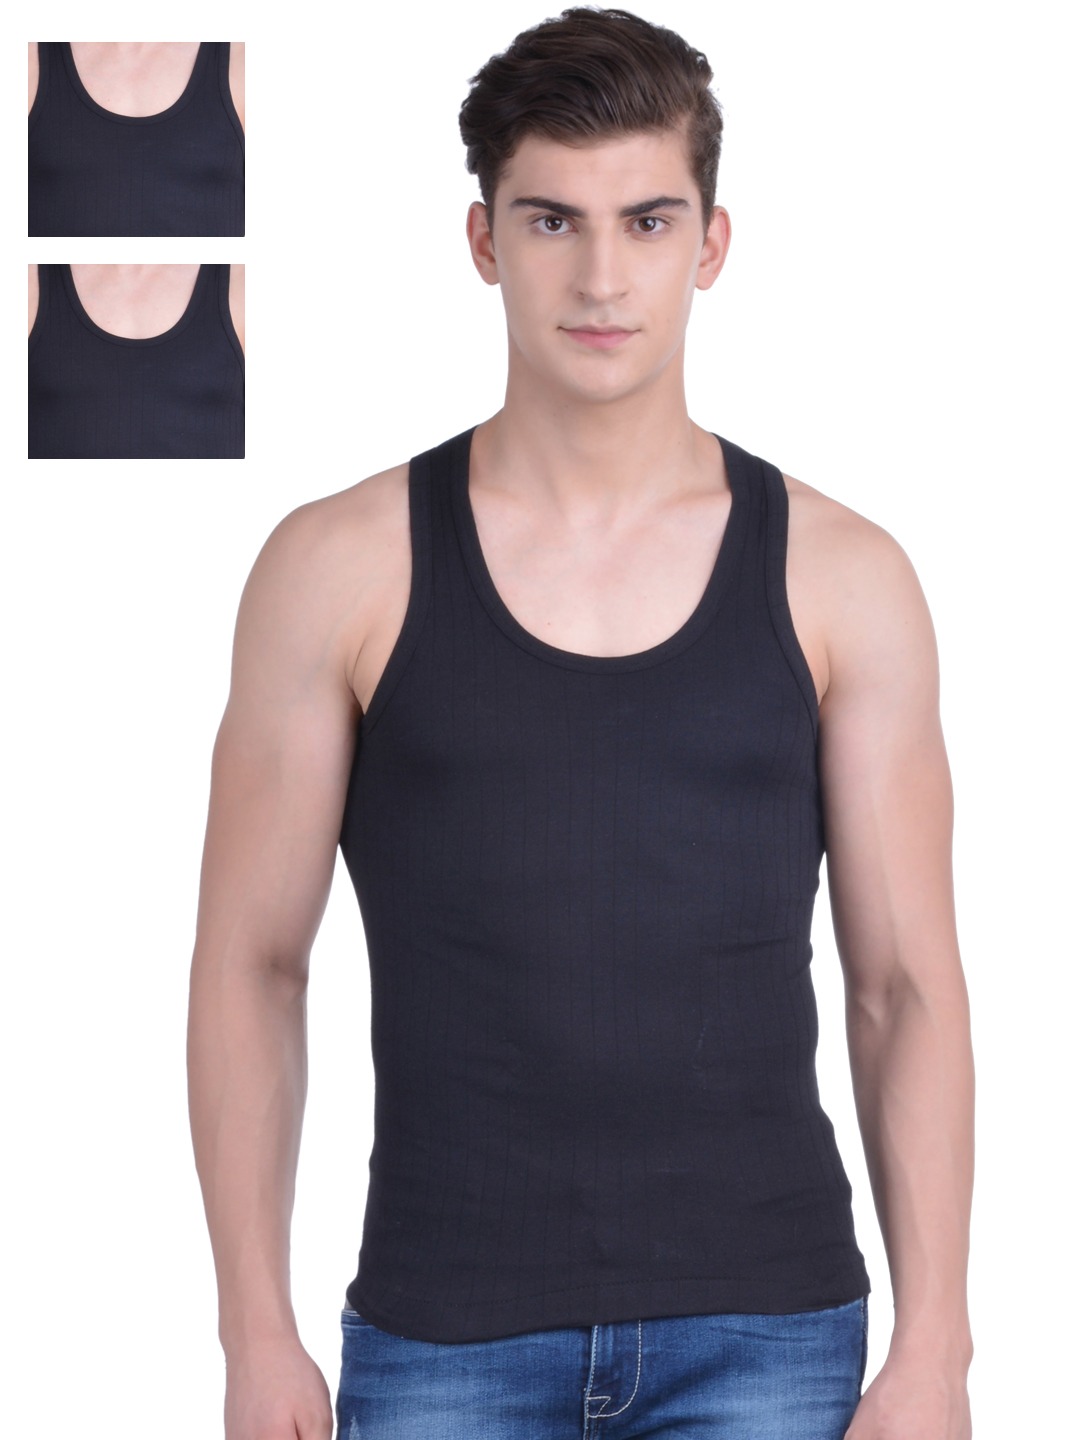 Clothing Innerwear Vests | Dollar Bigboss Pack of 3 Black Innerwear Vests - HX19785